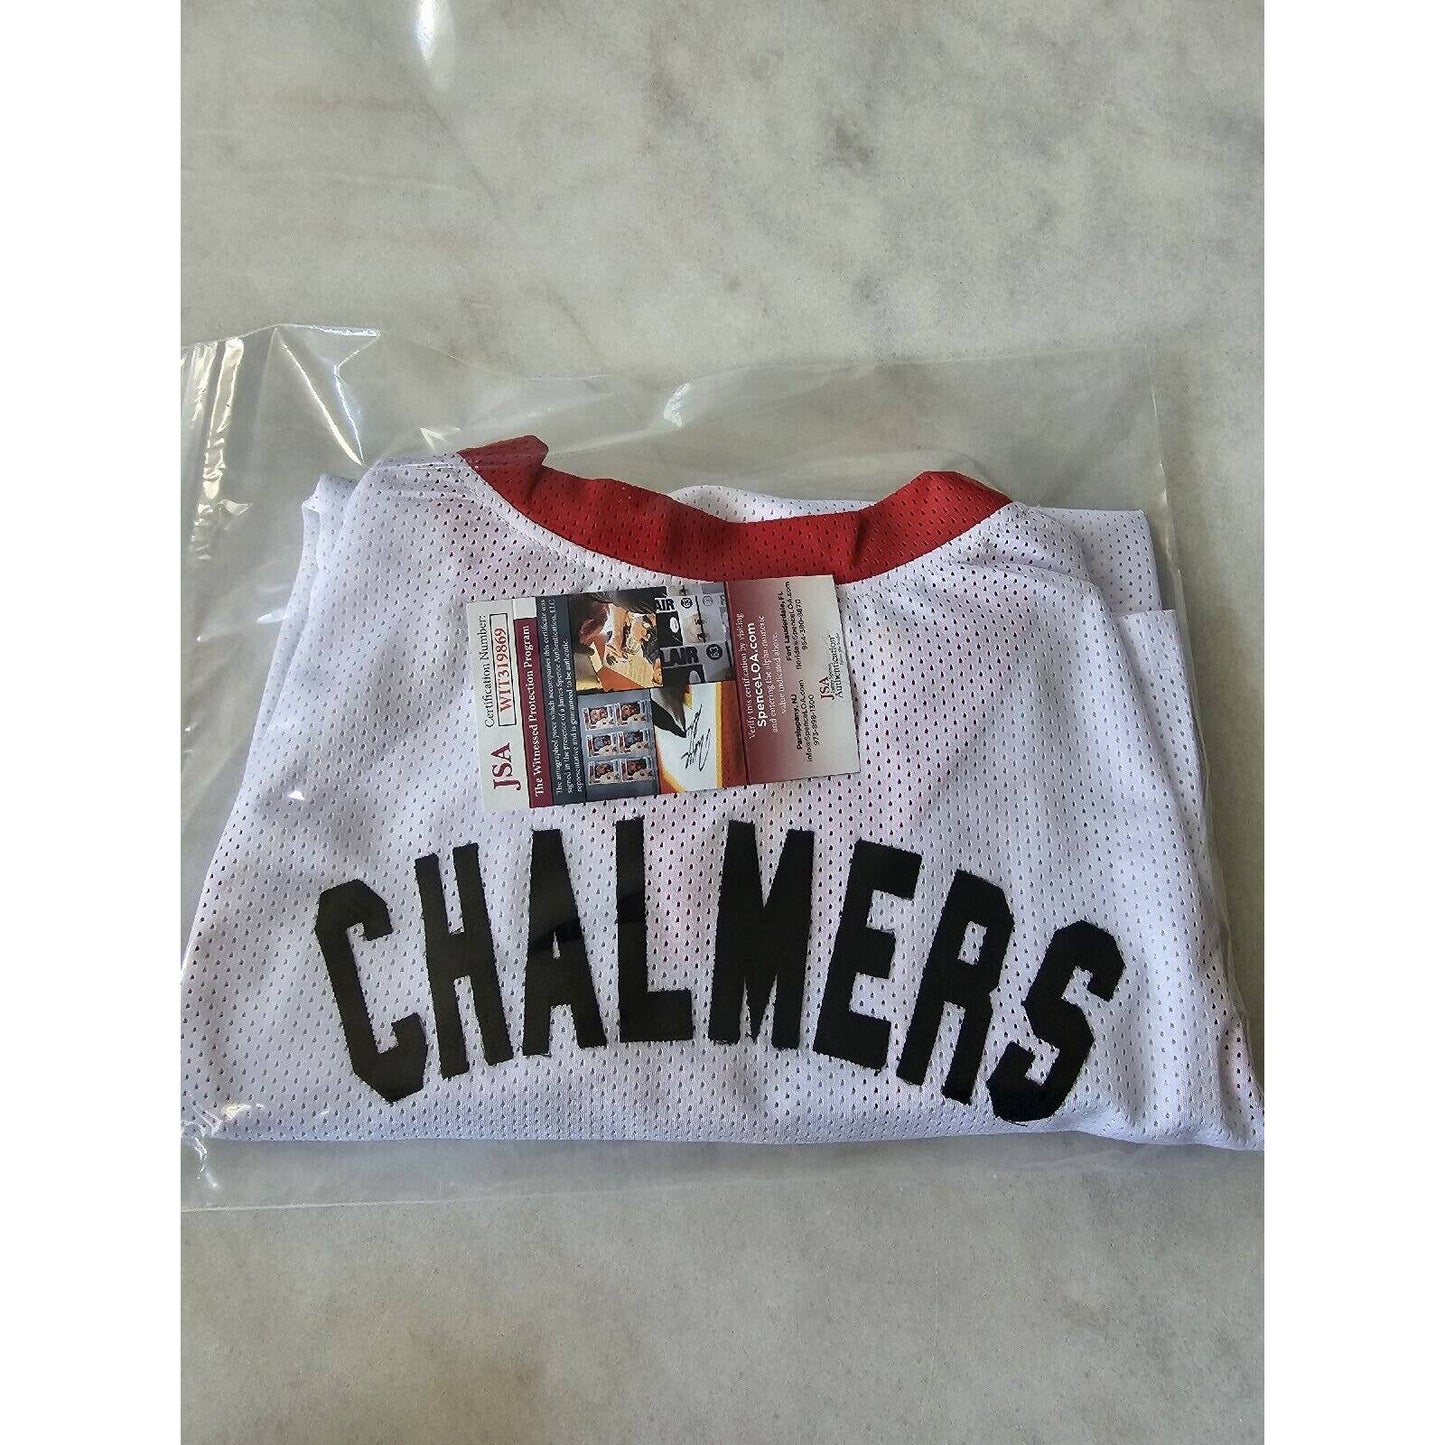 Mario Chalmers Autographed/Signed Jersey JSA COA Miami Heat